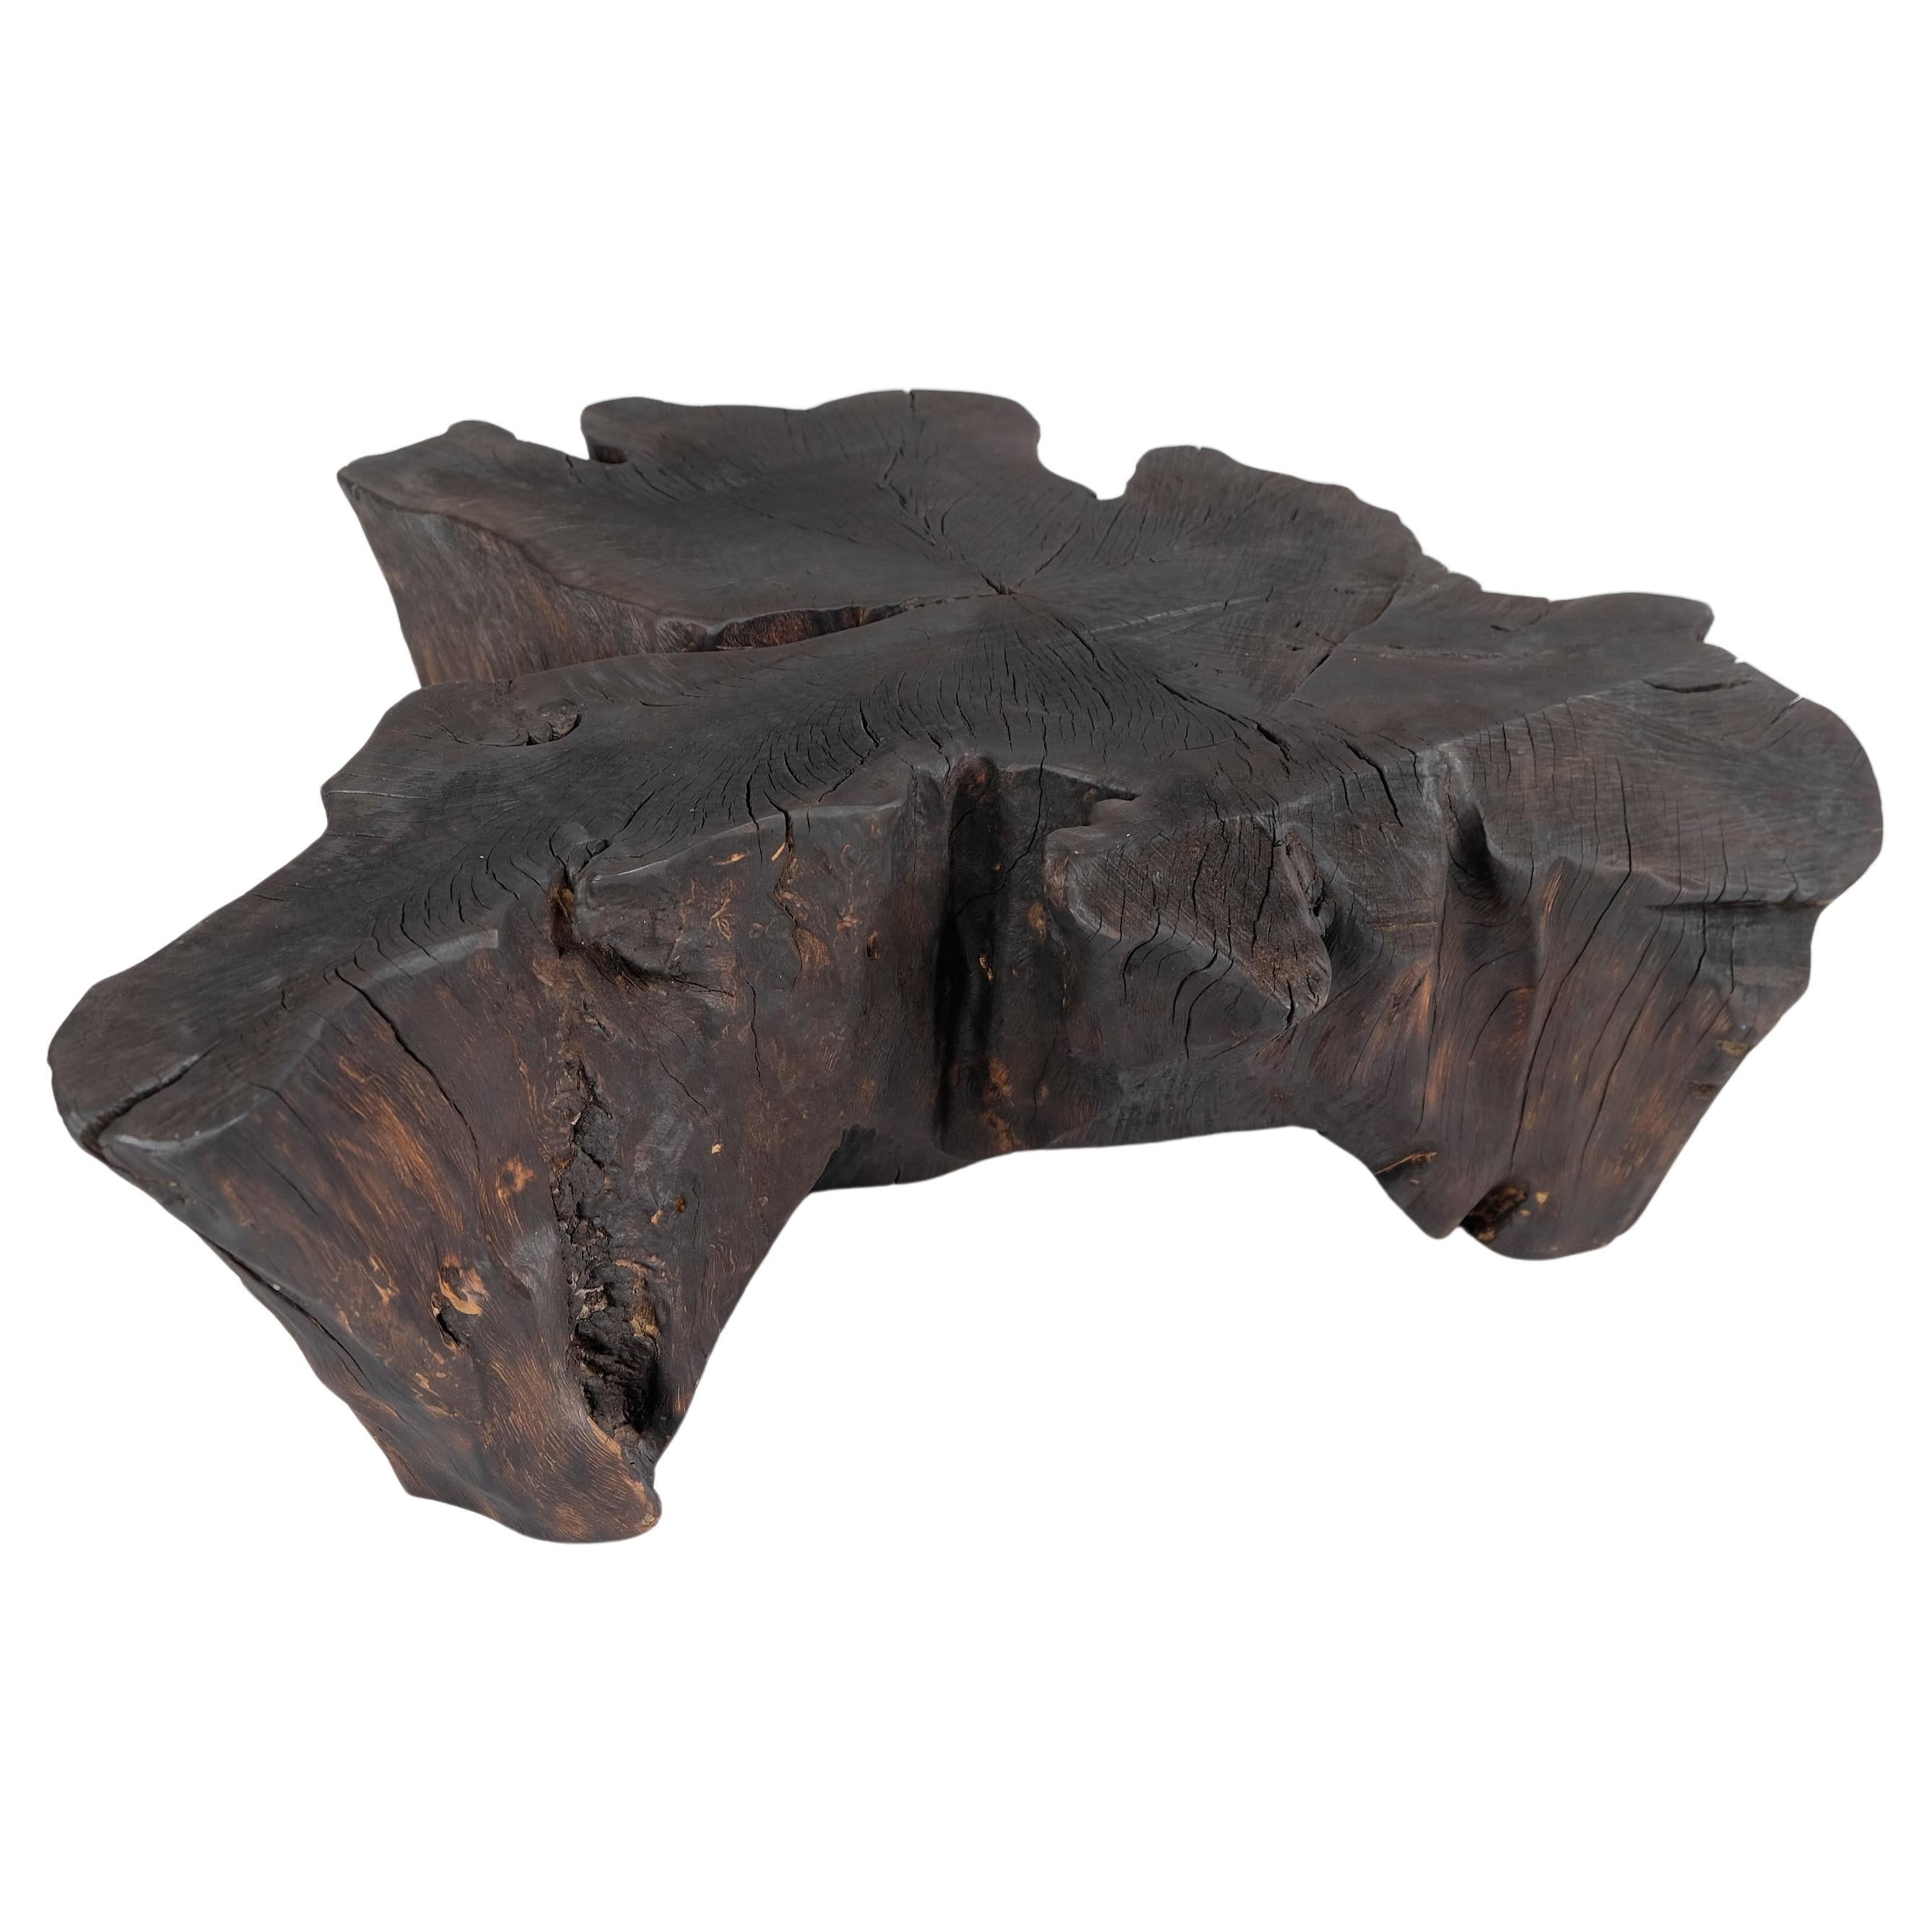 Solid Burnt Wood, Side Table, Stool, Wabi Sabi, Chainsaw Carved, Handmade